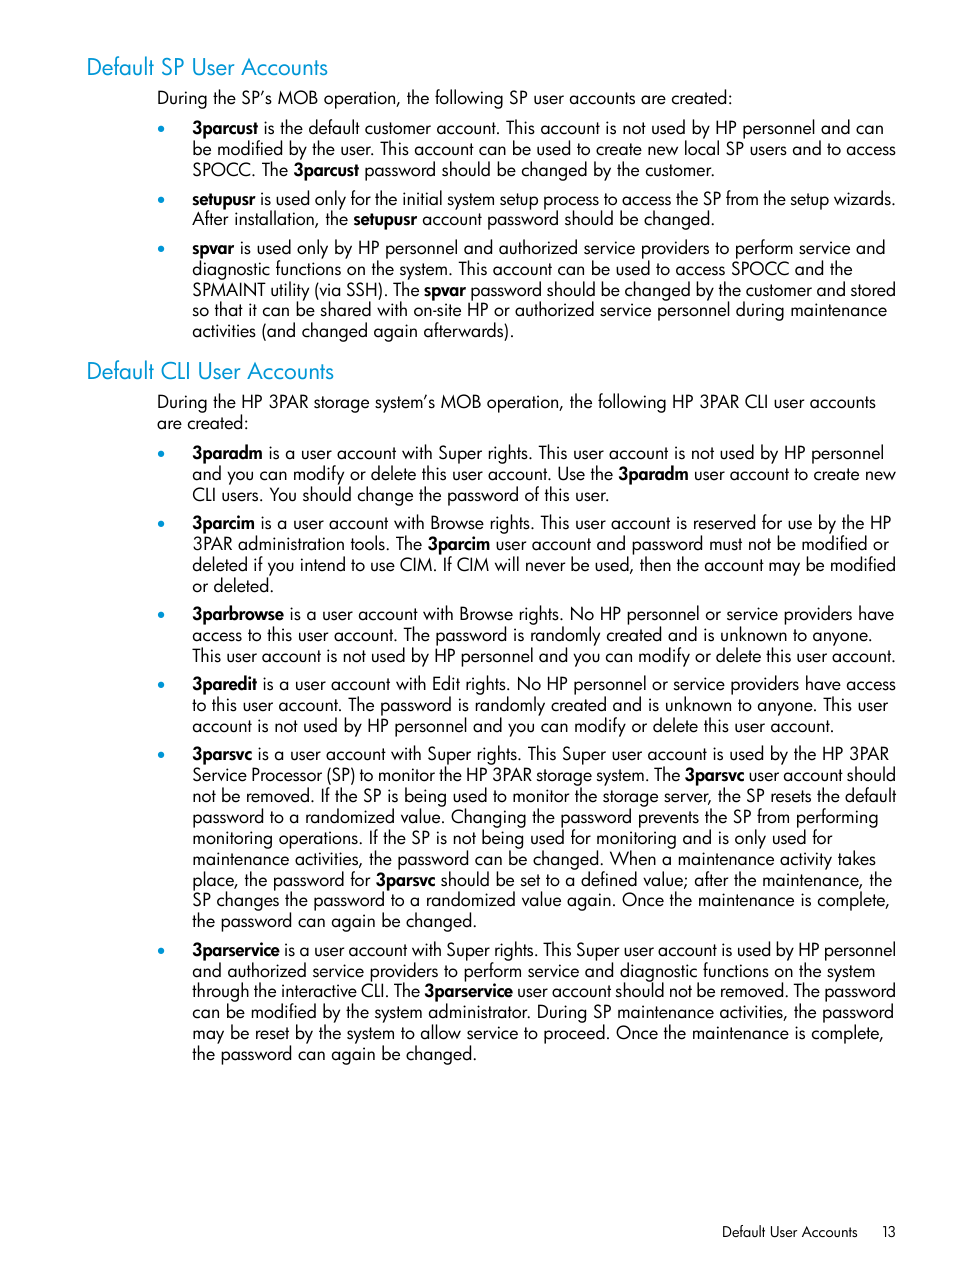 Default sp user accounts, Default cli user accounts, Default sp user accounts default cli user accounts | HP 3PAR Service Processors User Manual | Page 13 / 51